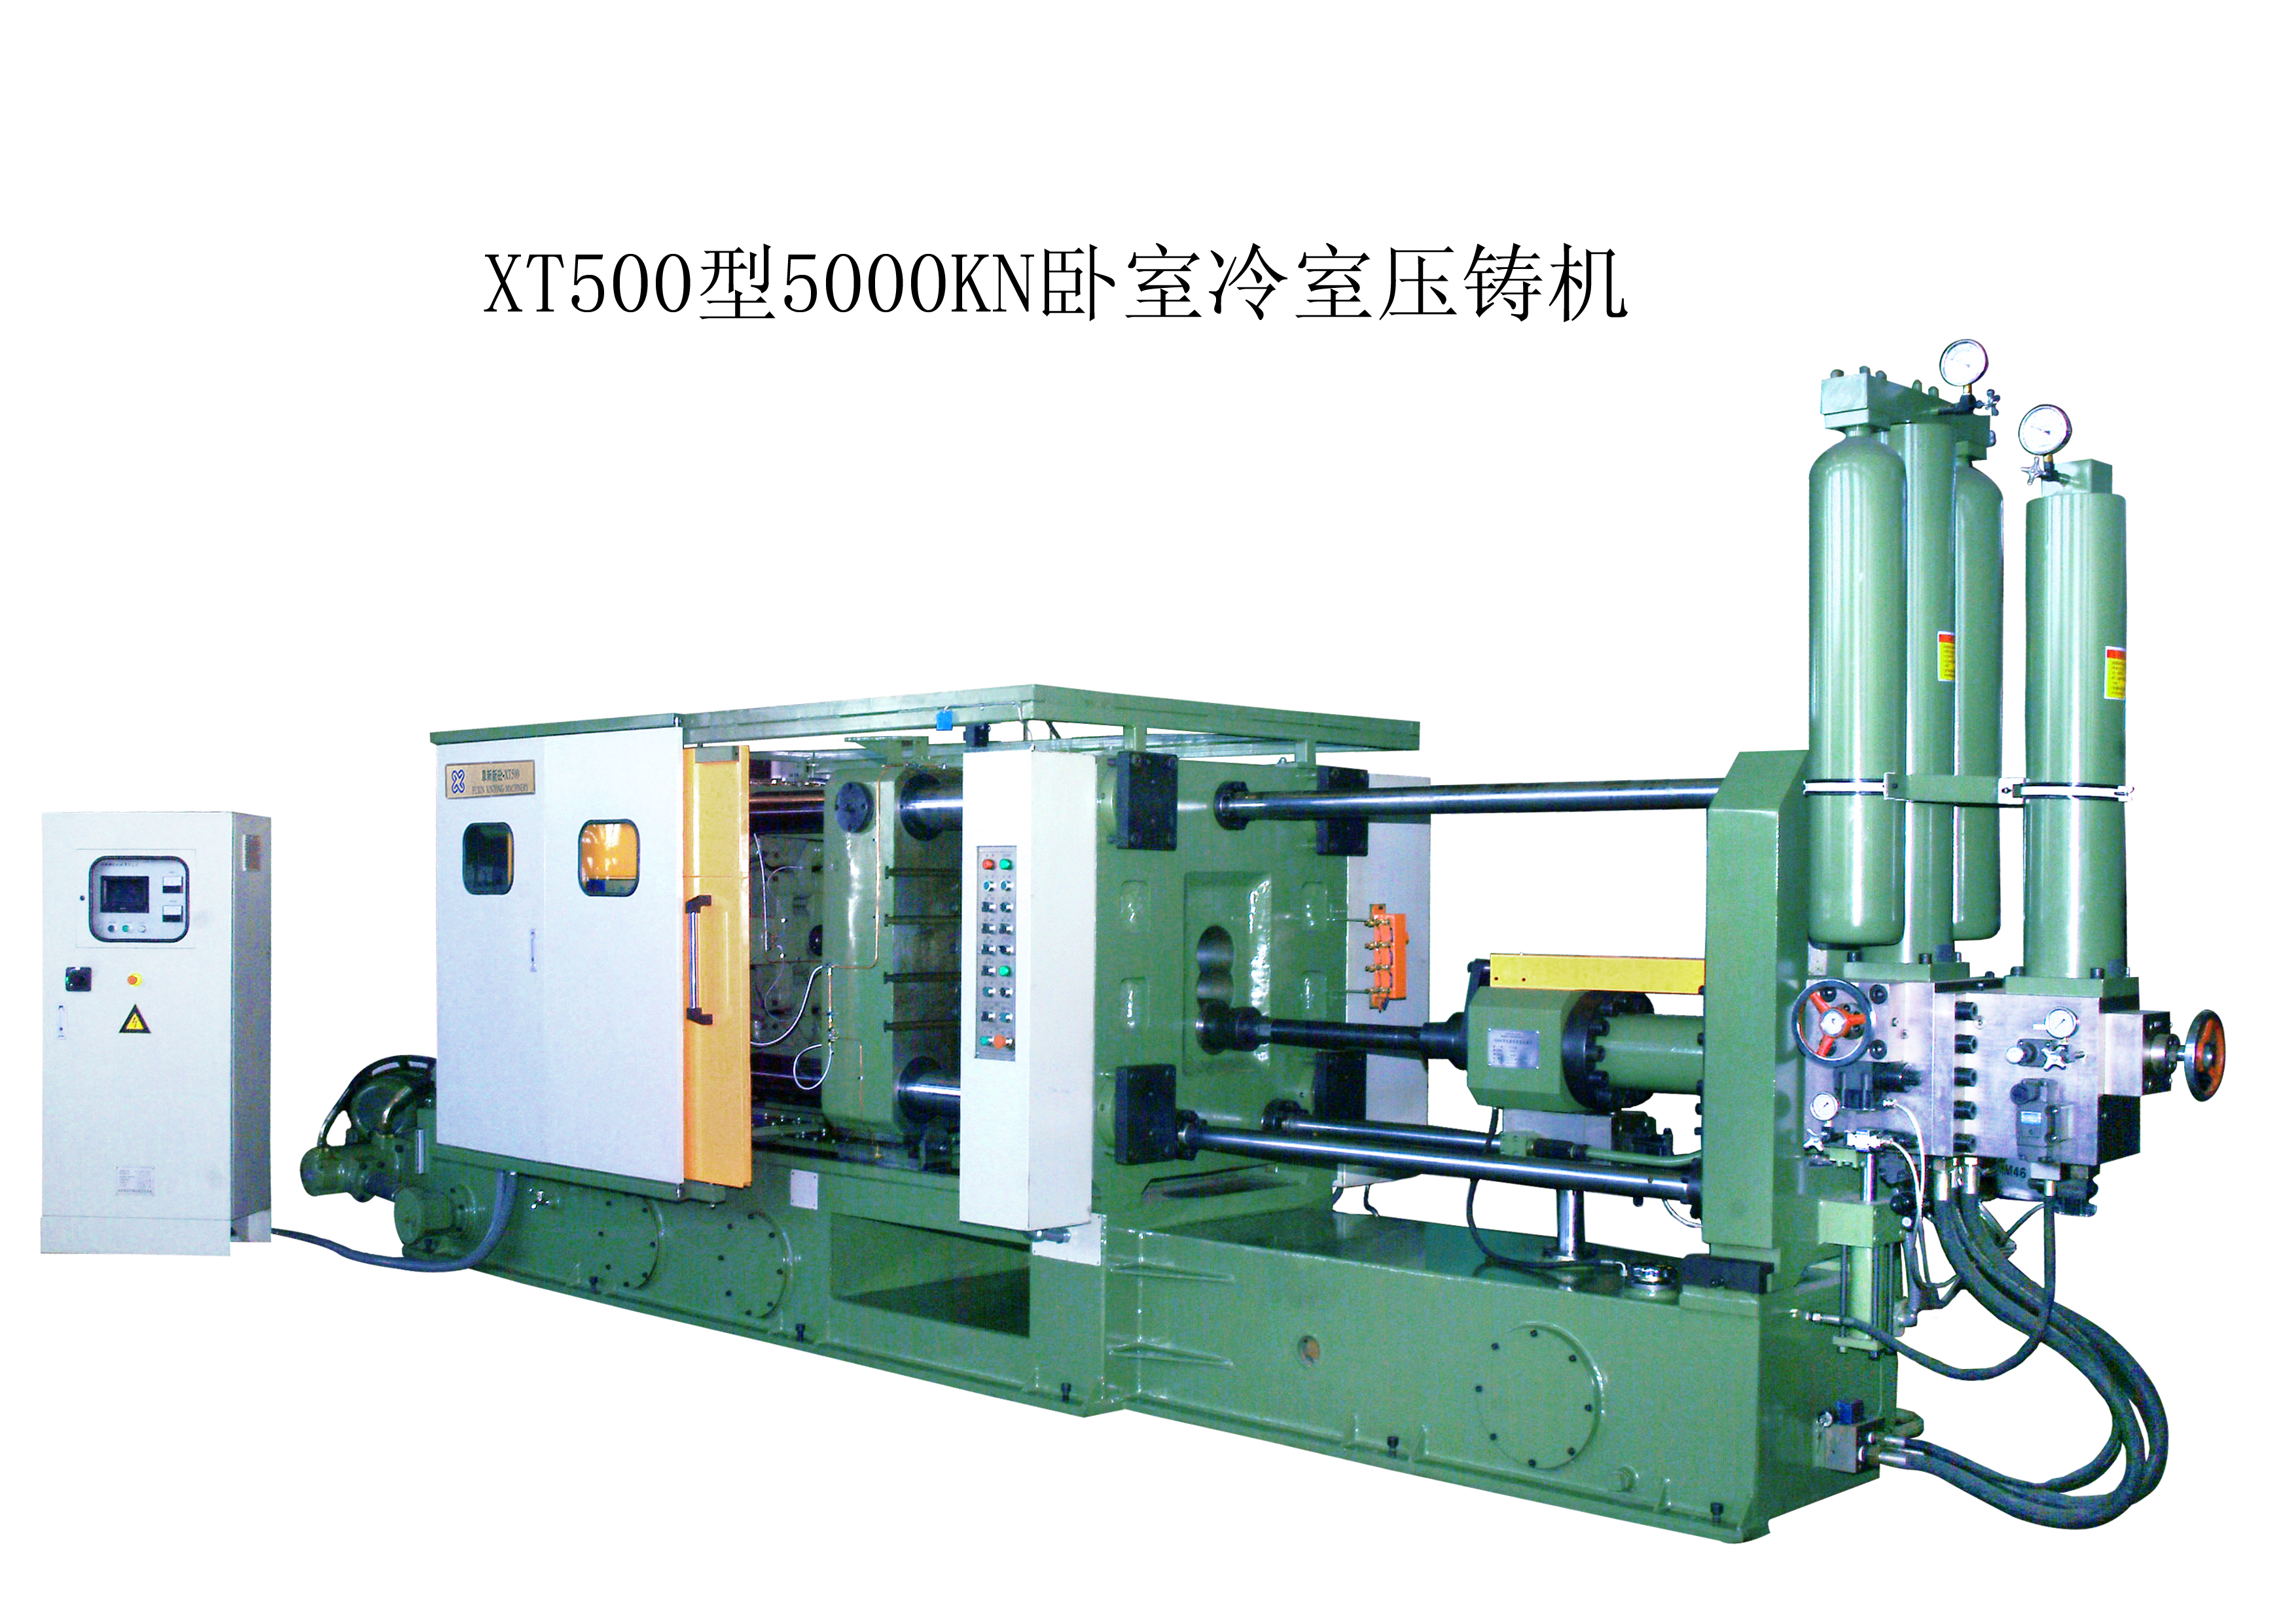 XT500型5000KN卧室冷室压铸机